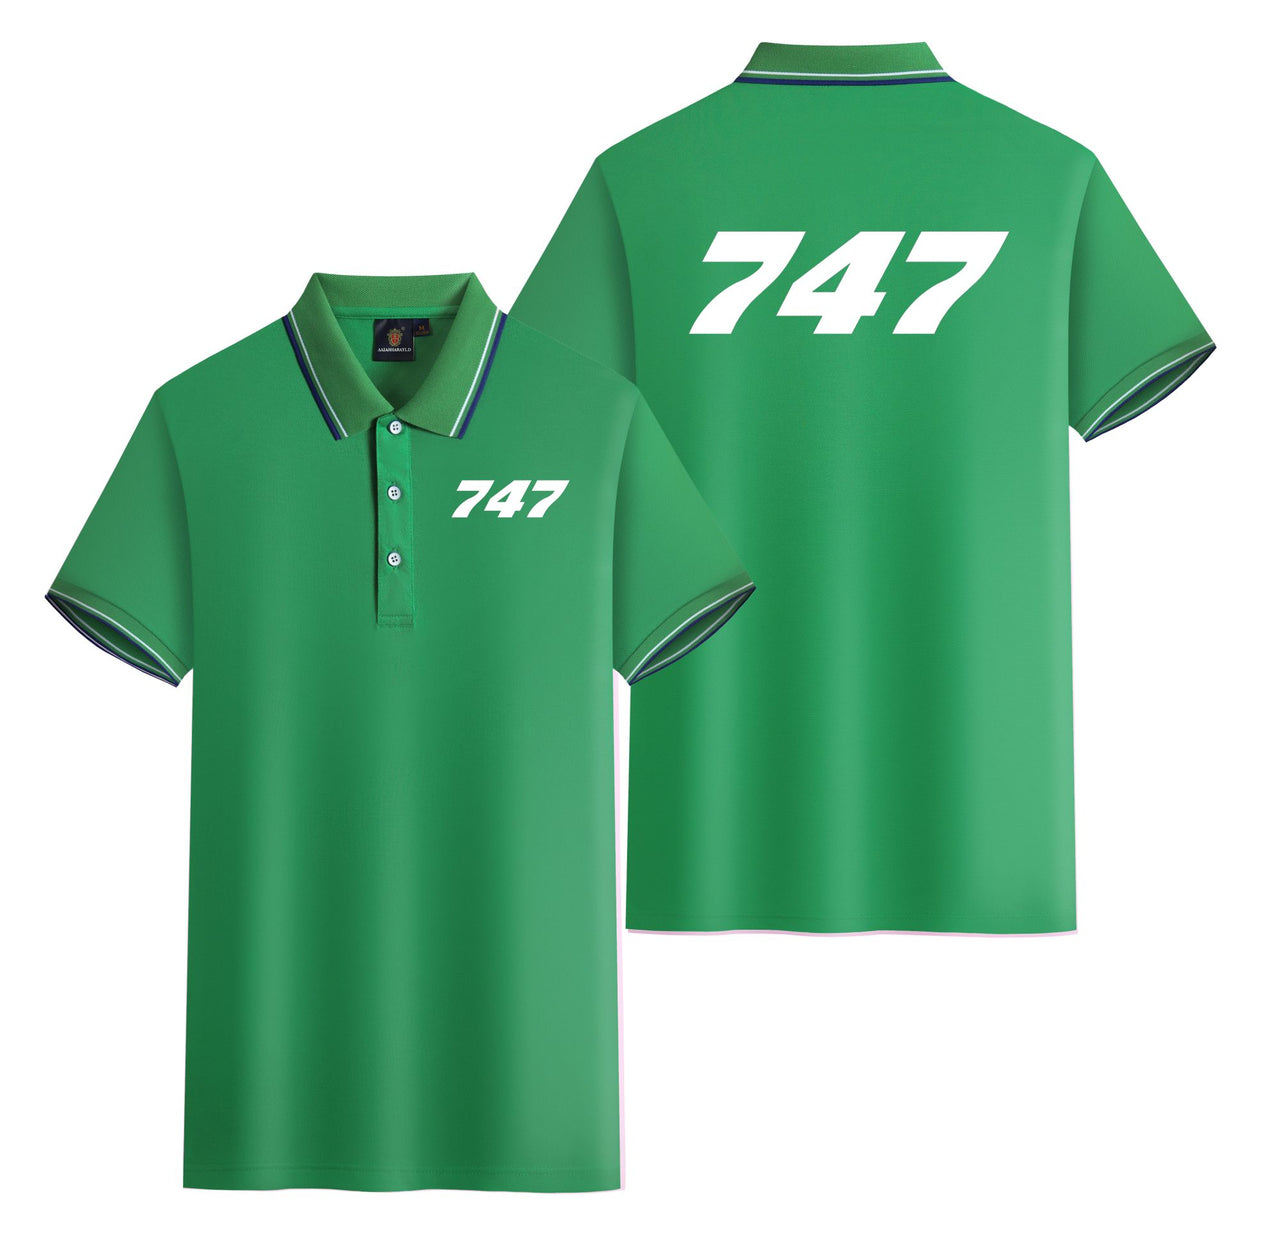 747 Flat Text Designed Stylish Polo T-Shirts (Double-Side)